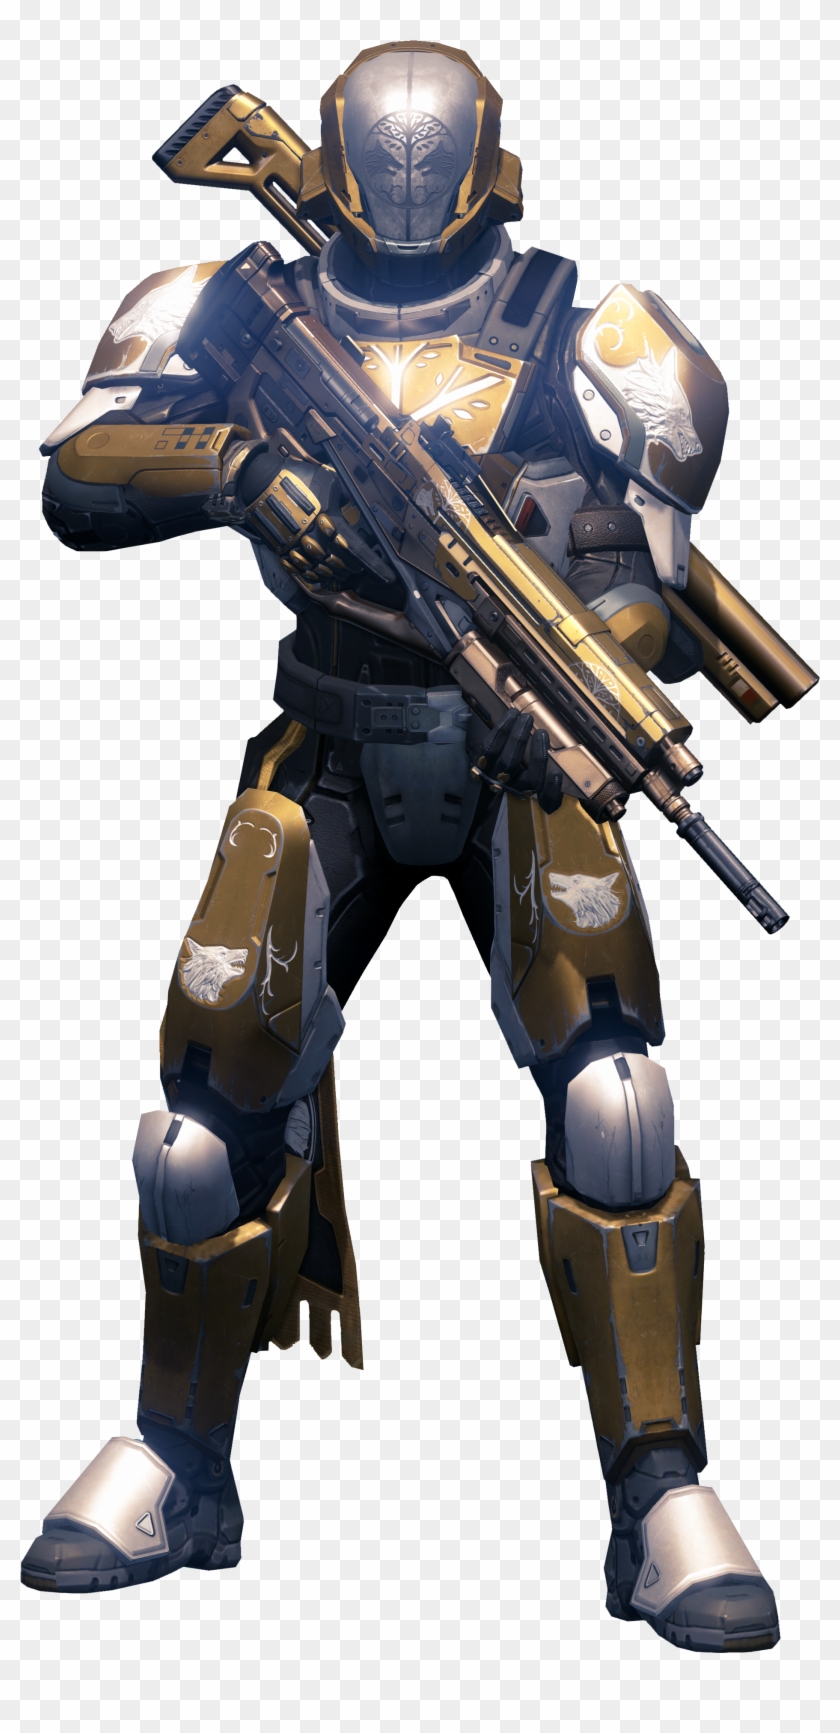 Destiny Titan Armor Iron Banner - Action Figure Clipart #4496175